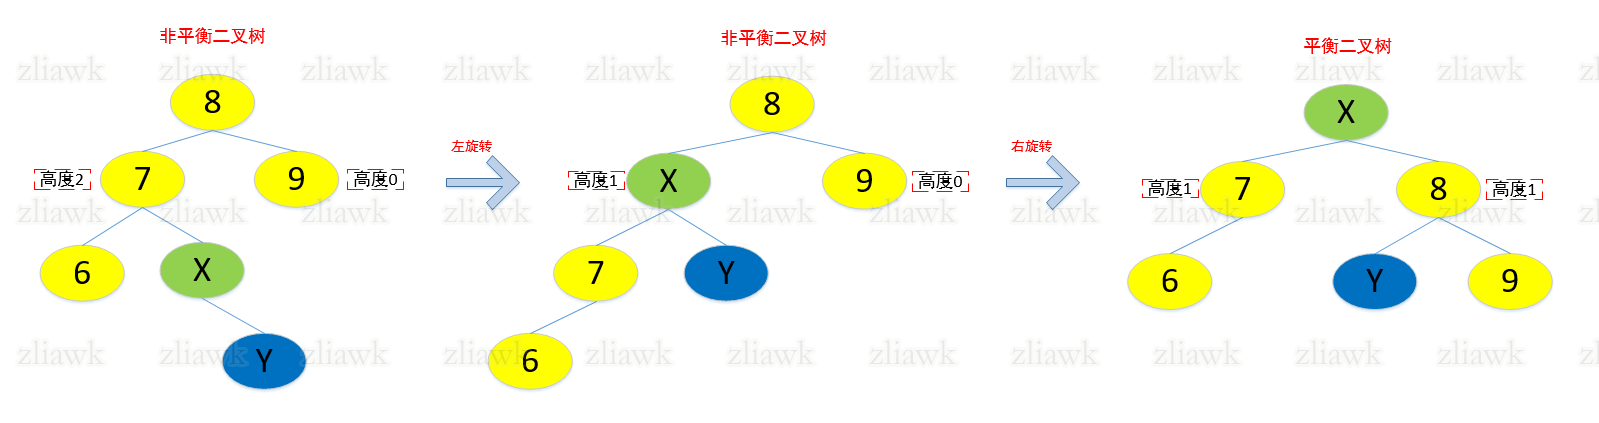 avl平衡二叉树结构-4